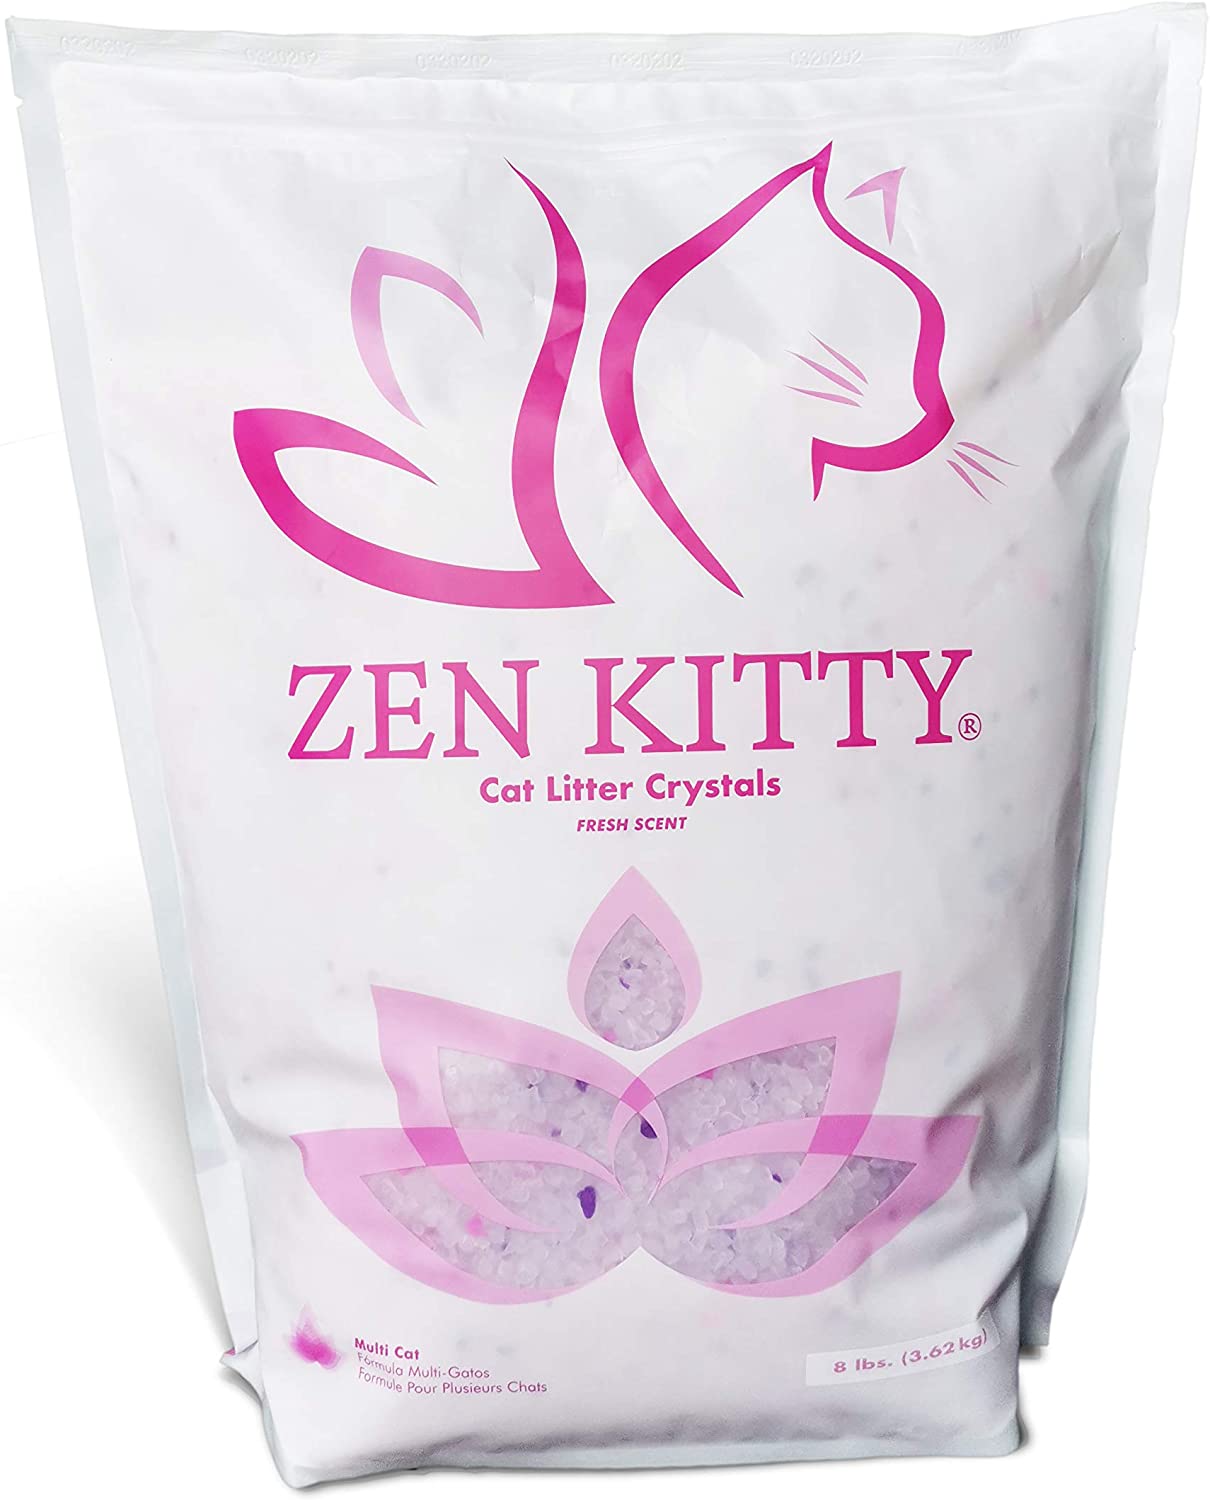 Zen Kitty crystal litter